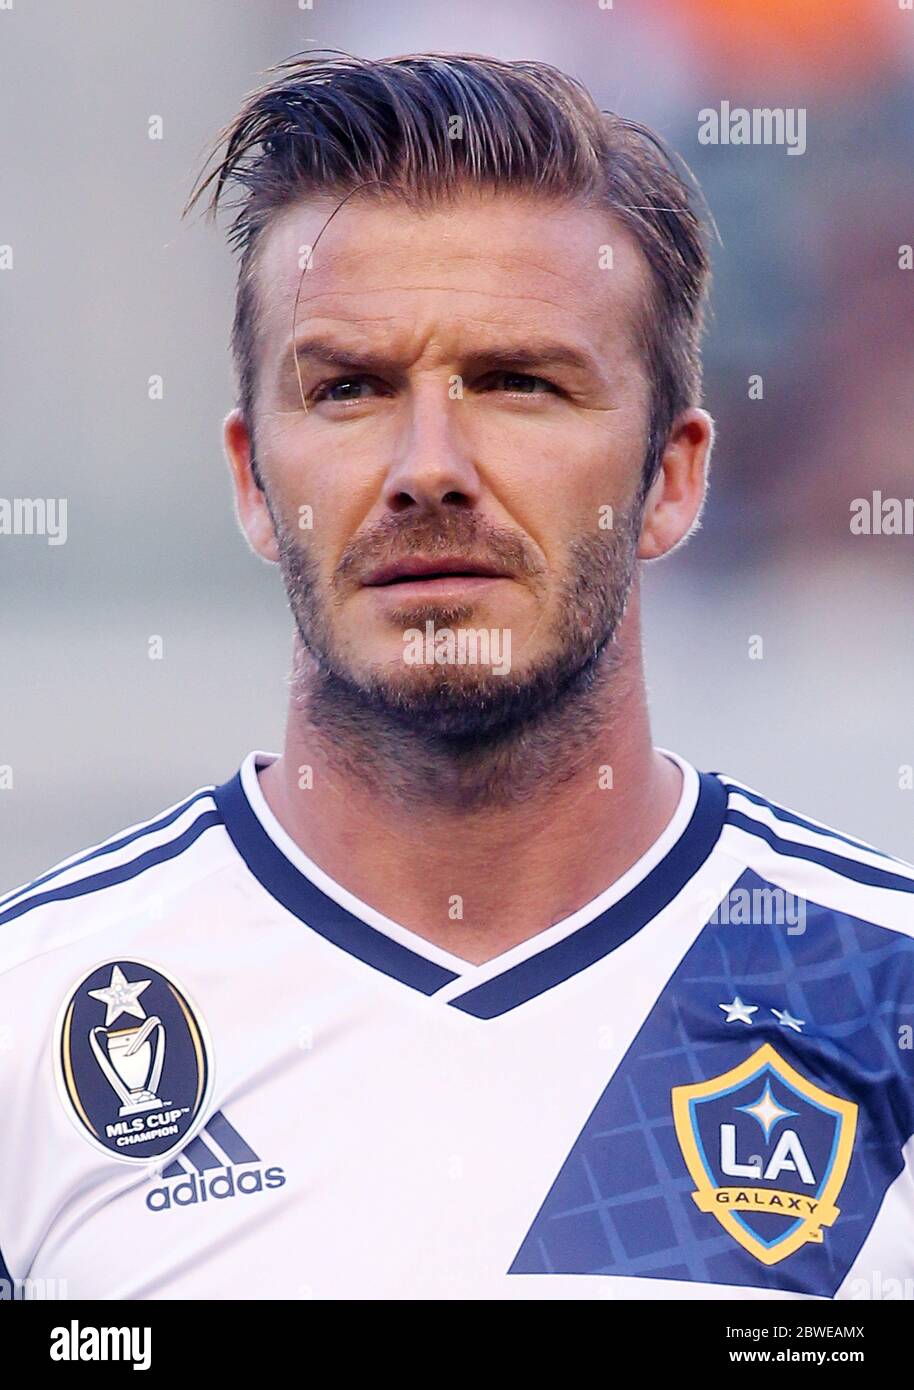 David Beckham kicking football during game, February 2011 Stock Photo